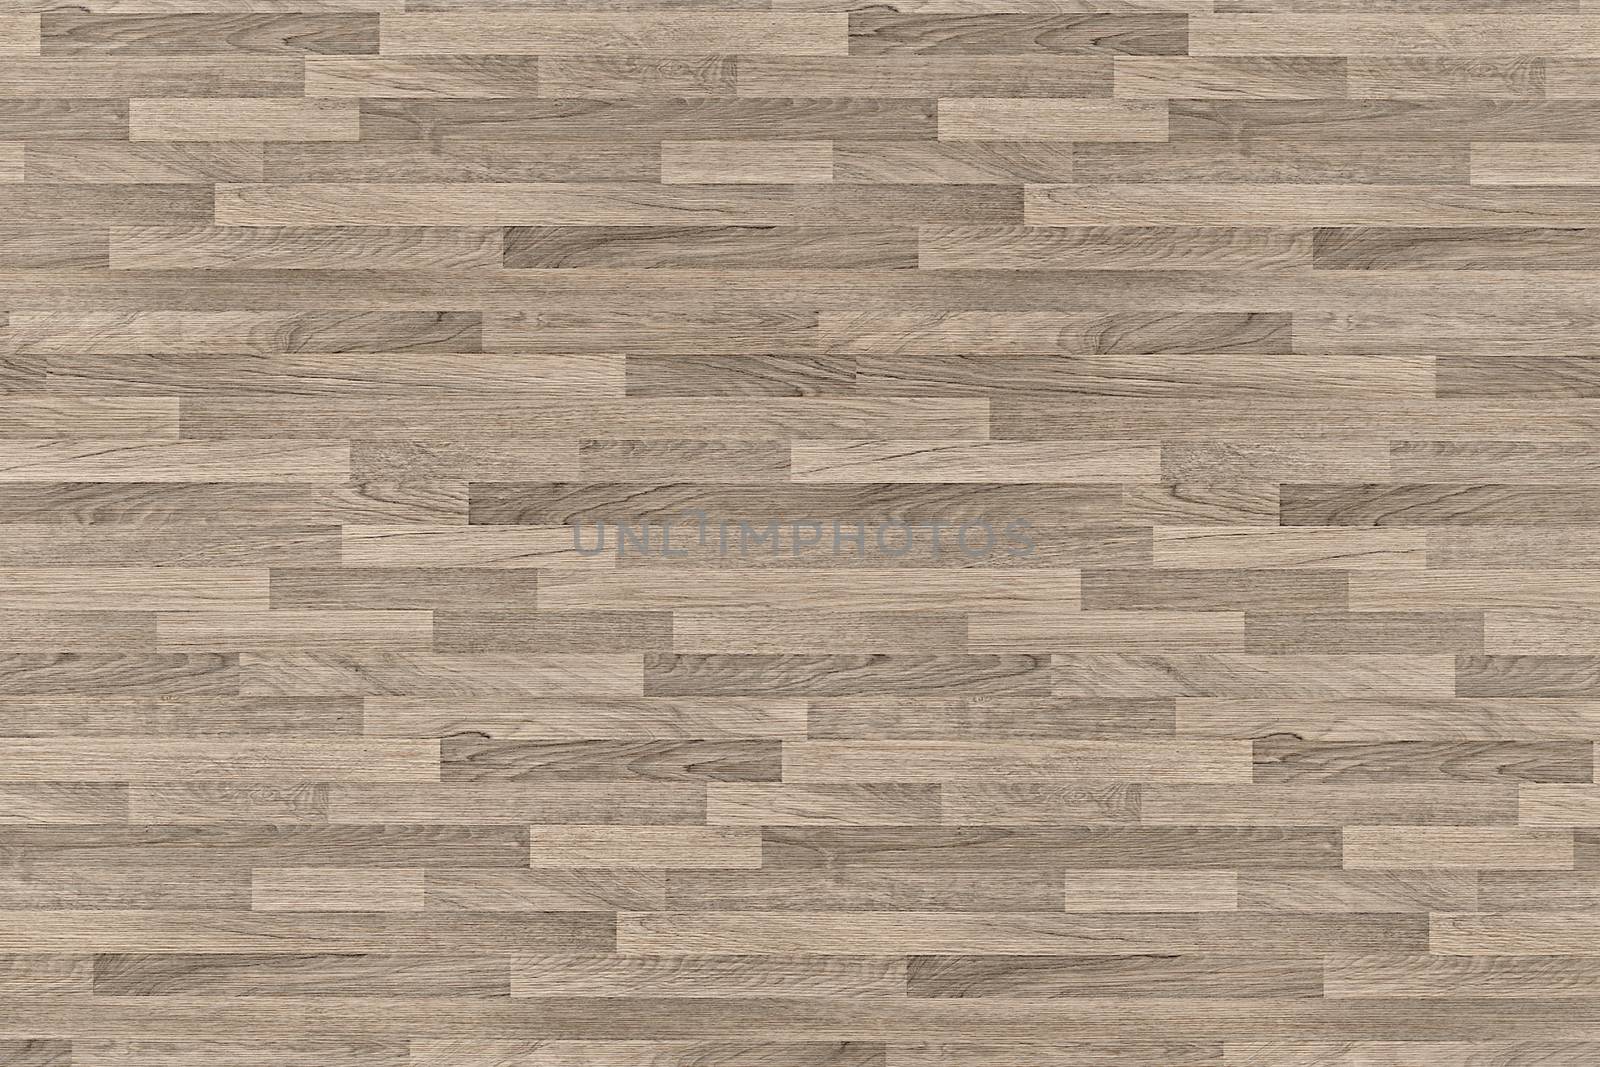 Laminate parquet flooring. Light wooden texture background. by ivo_13